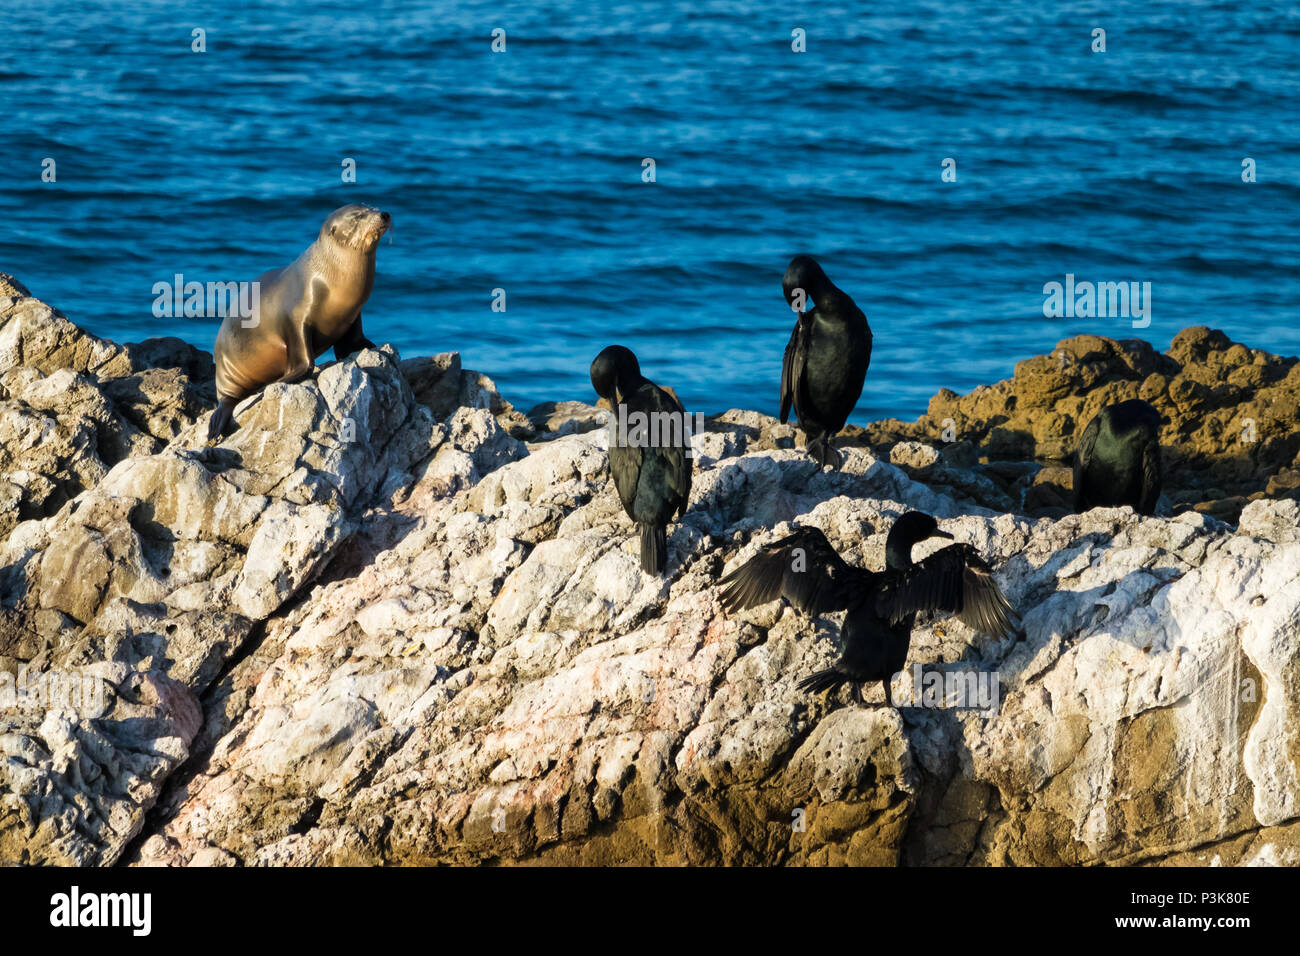 Large rock on Pacific Coast of USA Malibu, California.  Native seal and marine birds sitting on top. Stock Photo